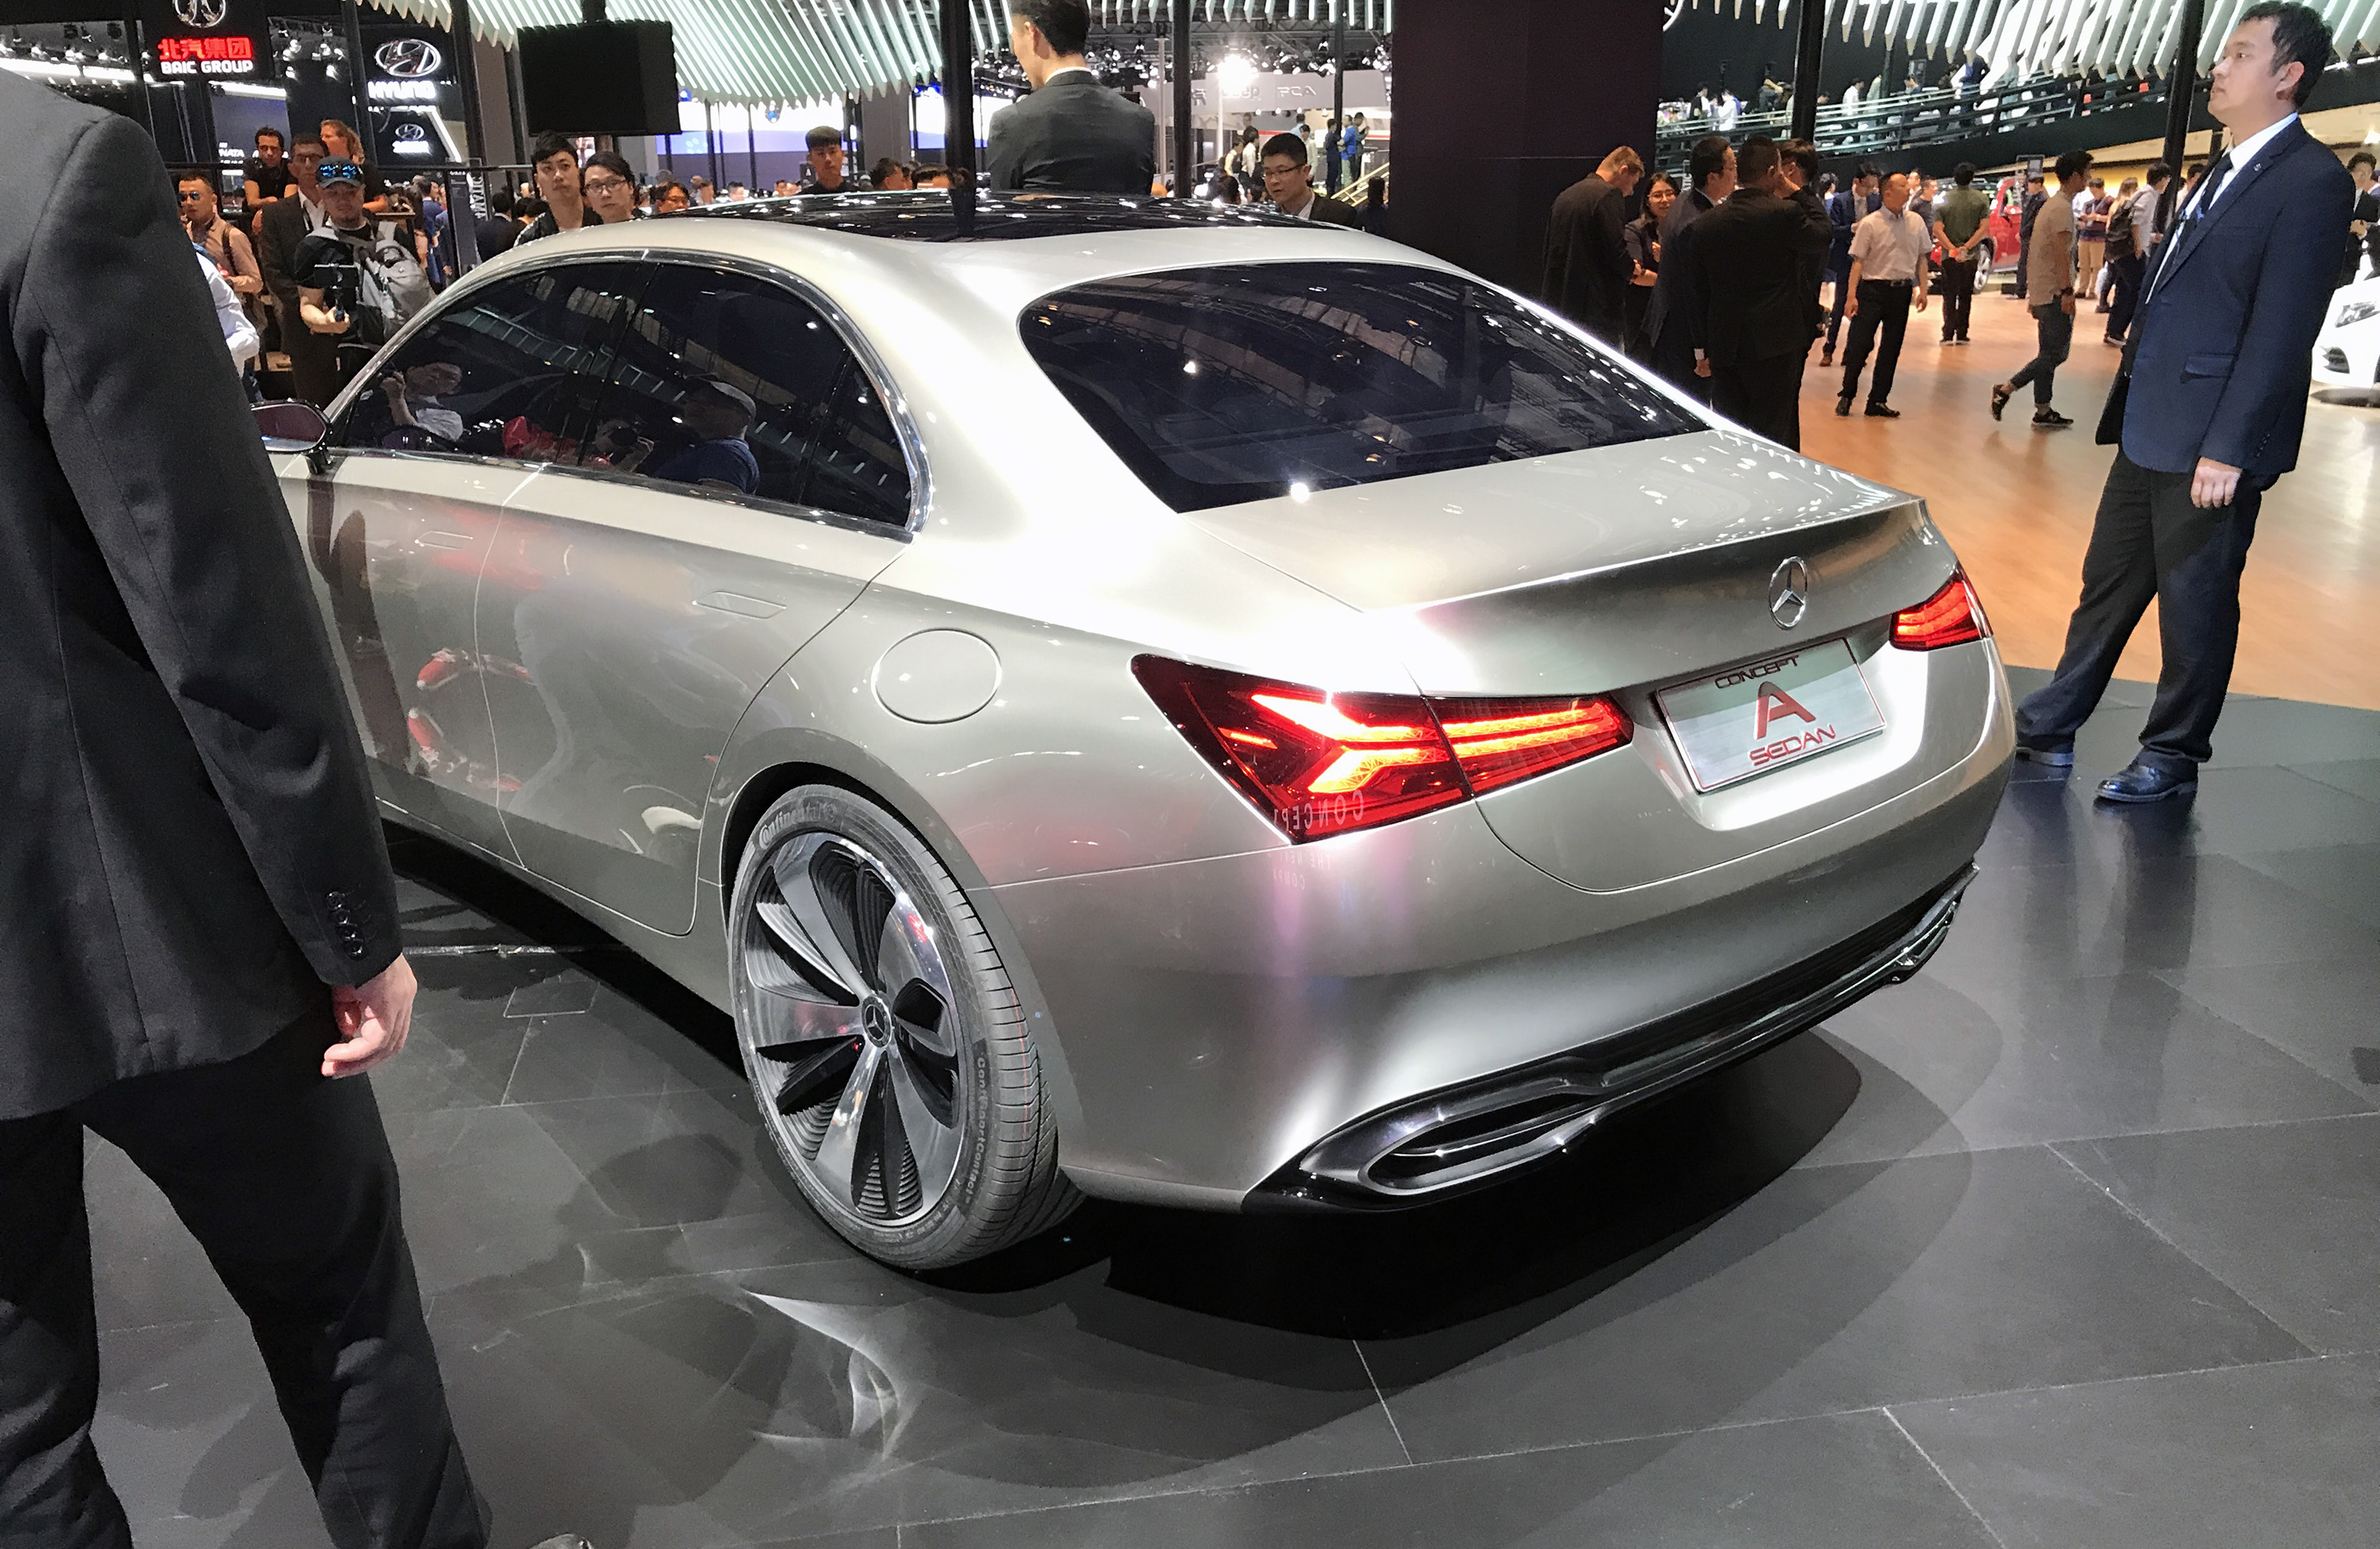 2018 Mercedes-Benz A-Class sedan concept revealed - photos | CarAdvice